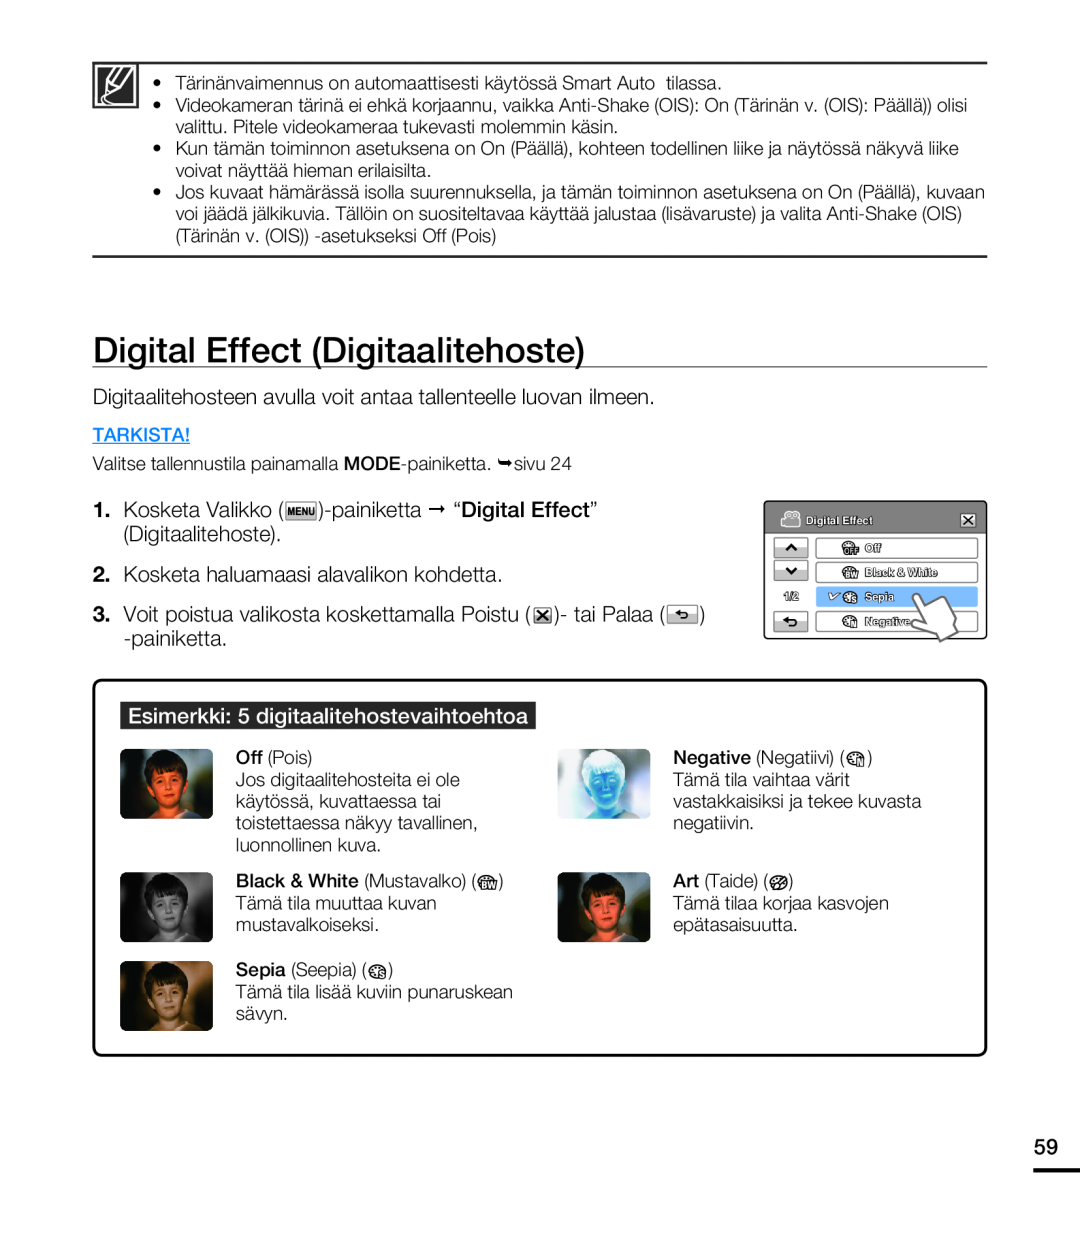 Samsung HMX-T10BP/EDC manual Digital Effect Digitaalitehoste, Kosketa haluamaasi alavalikon kohdetta, painiketta, Tarkista 